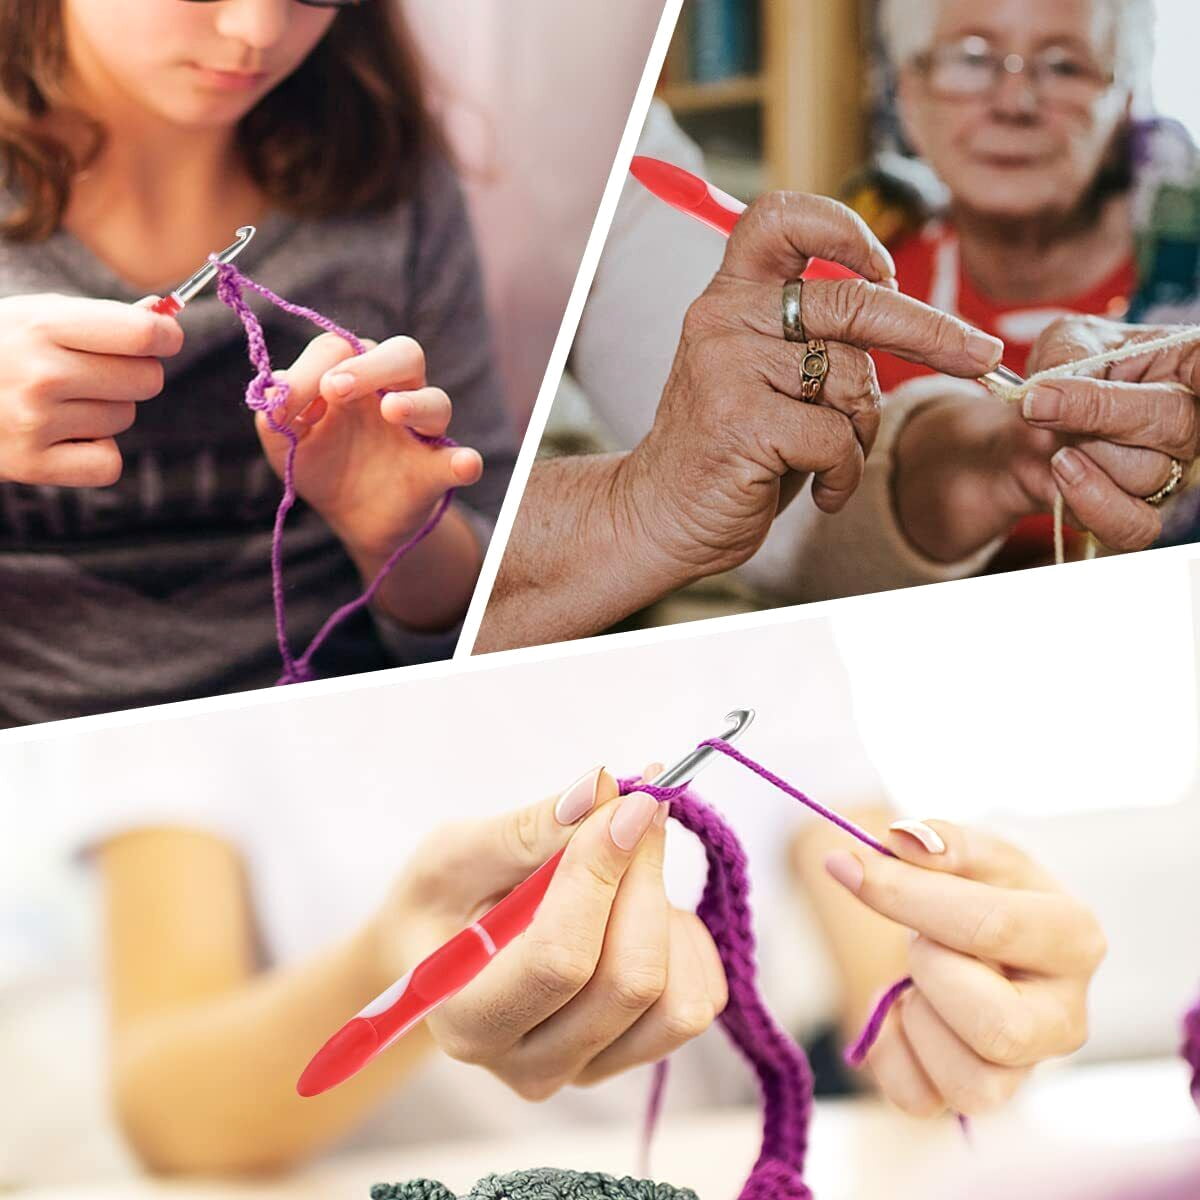 68 PCS CROCHET Kits for Beginners Colorful Crochet Hook Set with Case CA  $34.79 - PicClick AU